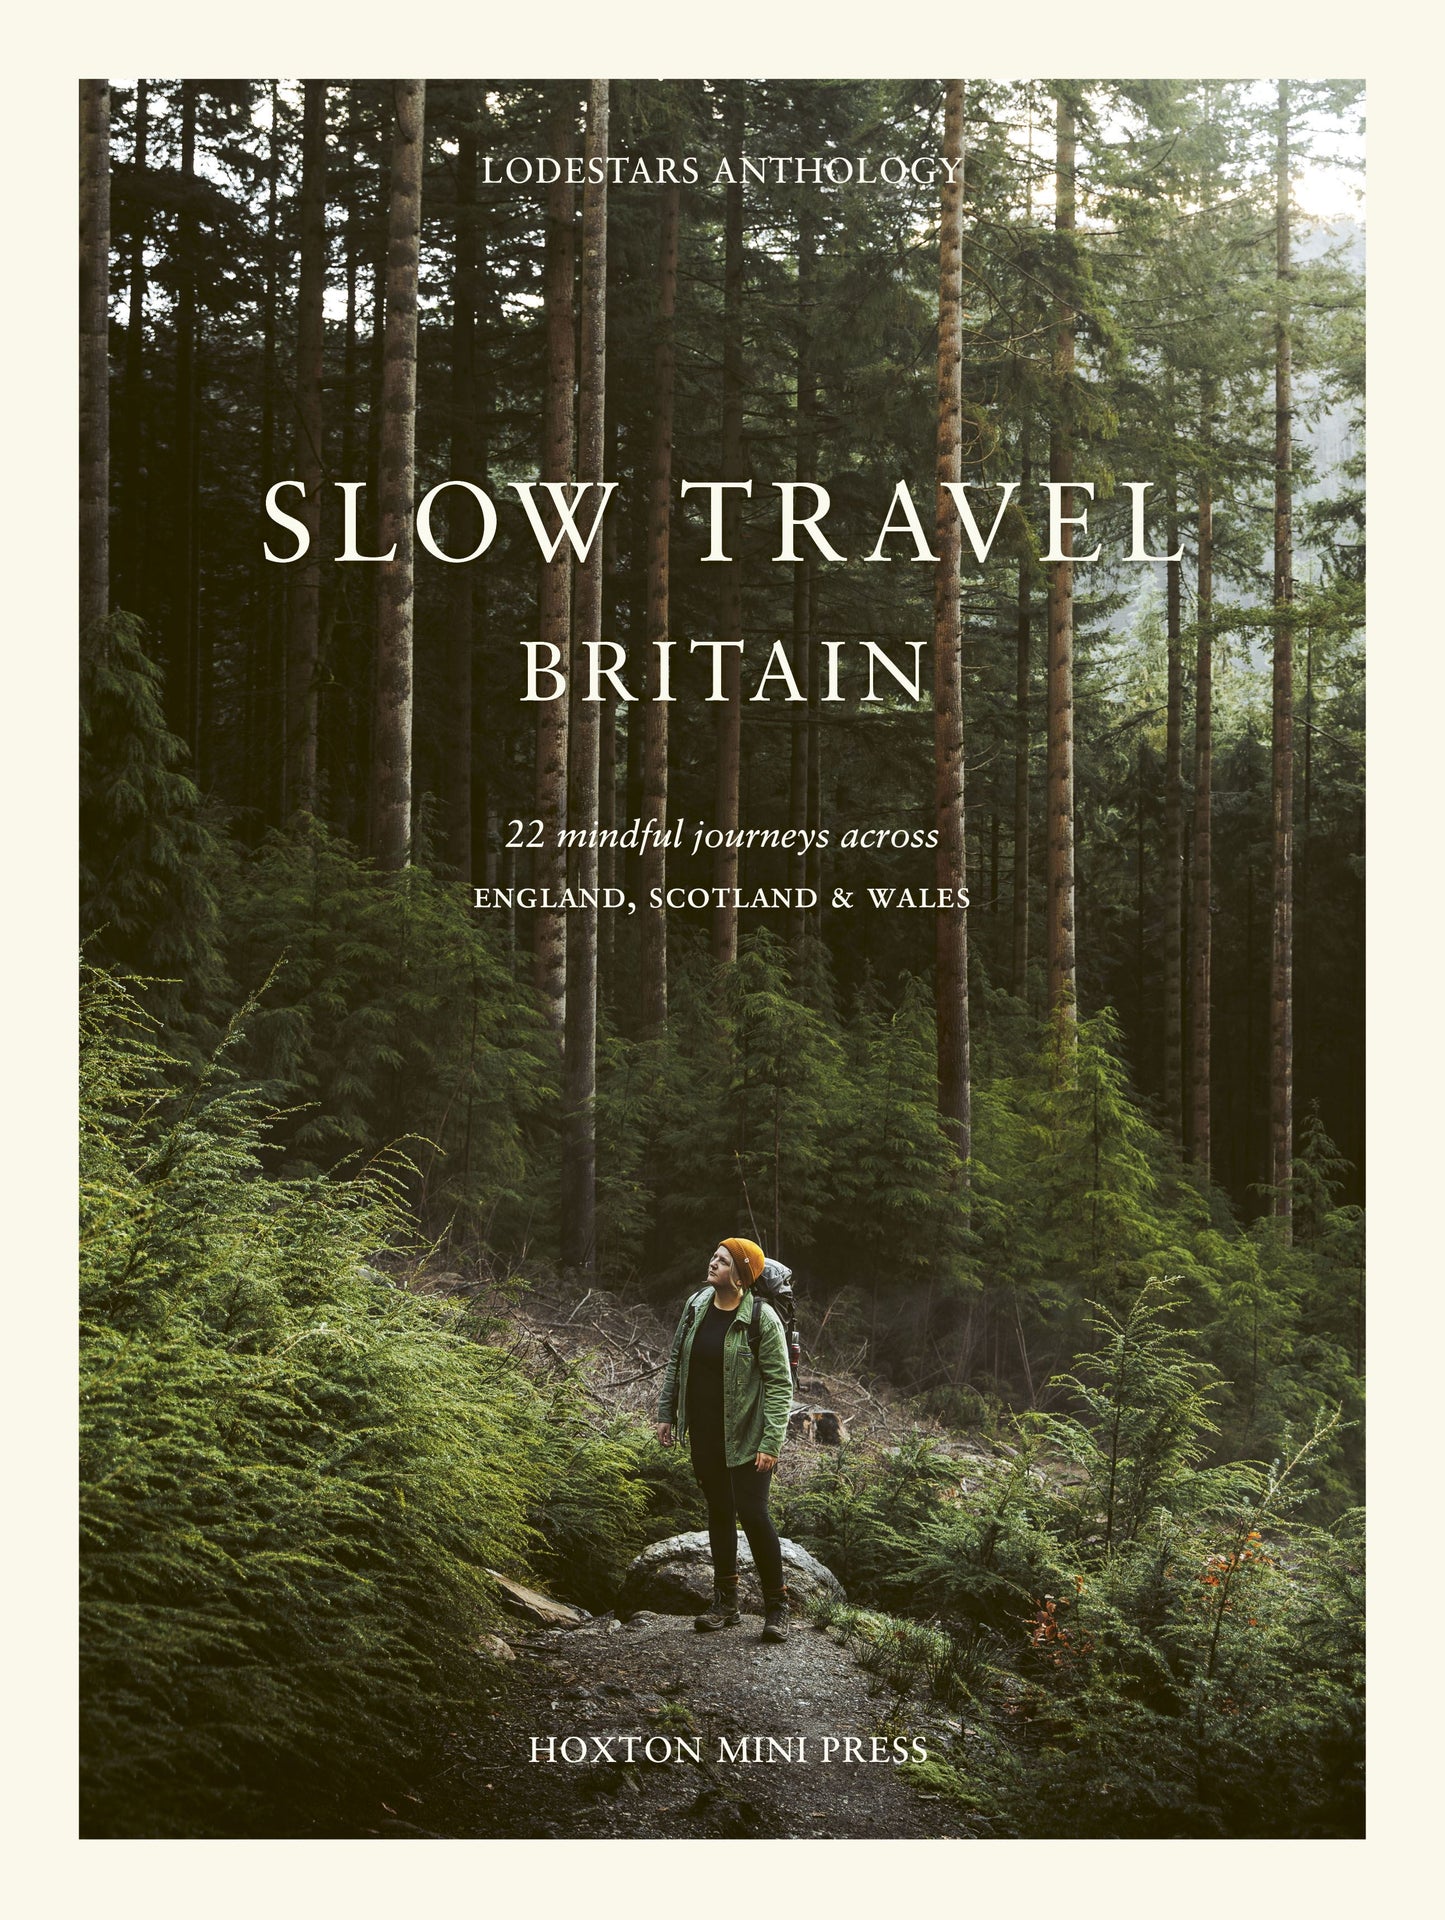 Slow Travel Britain by Hoxton Mini Press